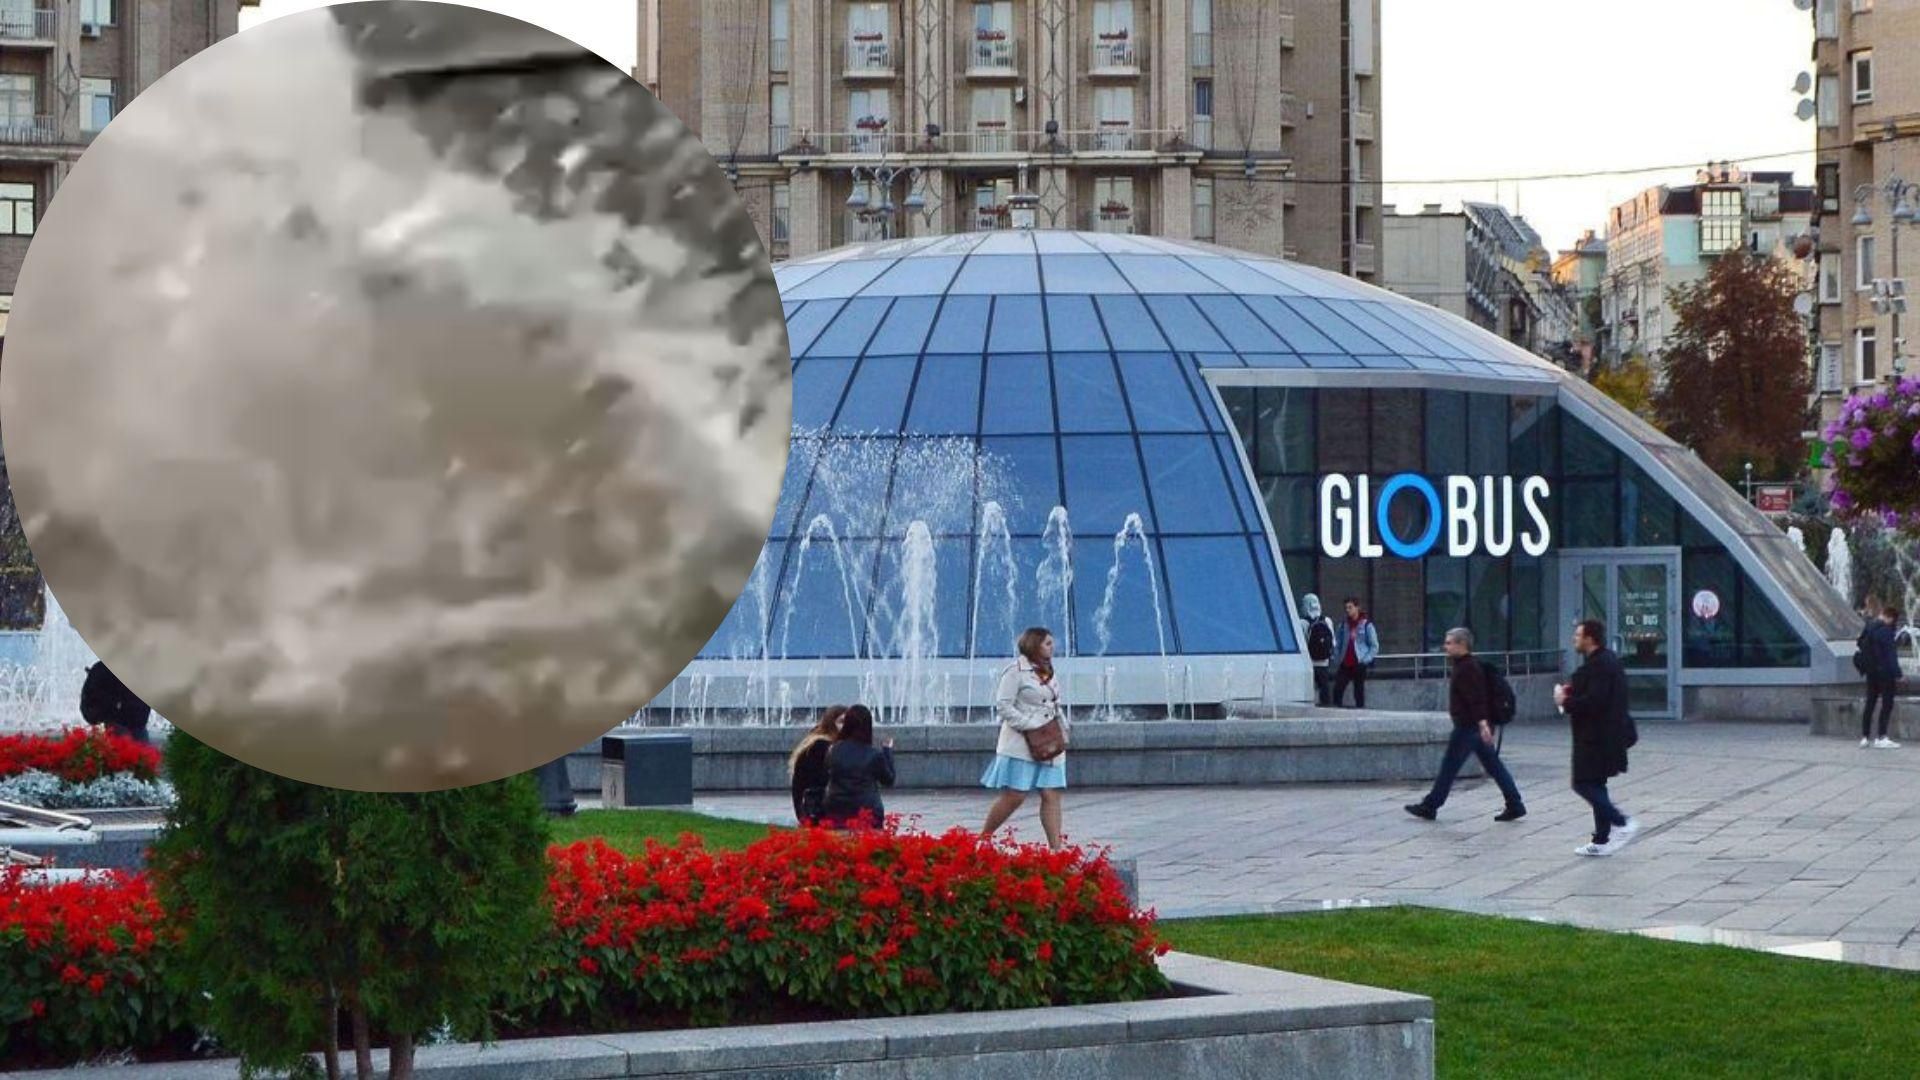 "Сели на пол, сепары": в Киеве мужчина набросился на сотрудников ТЦ – видео 18+